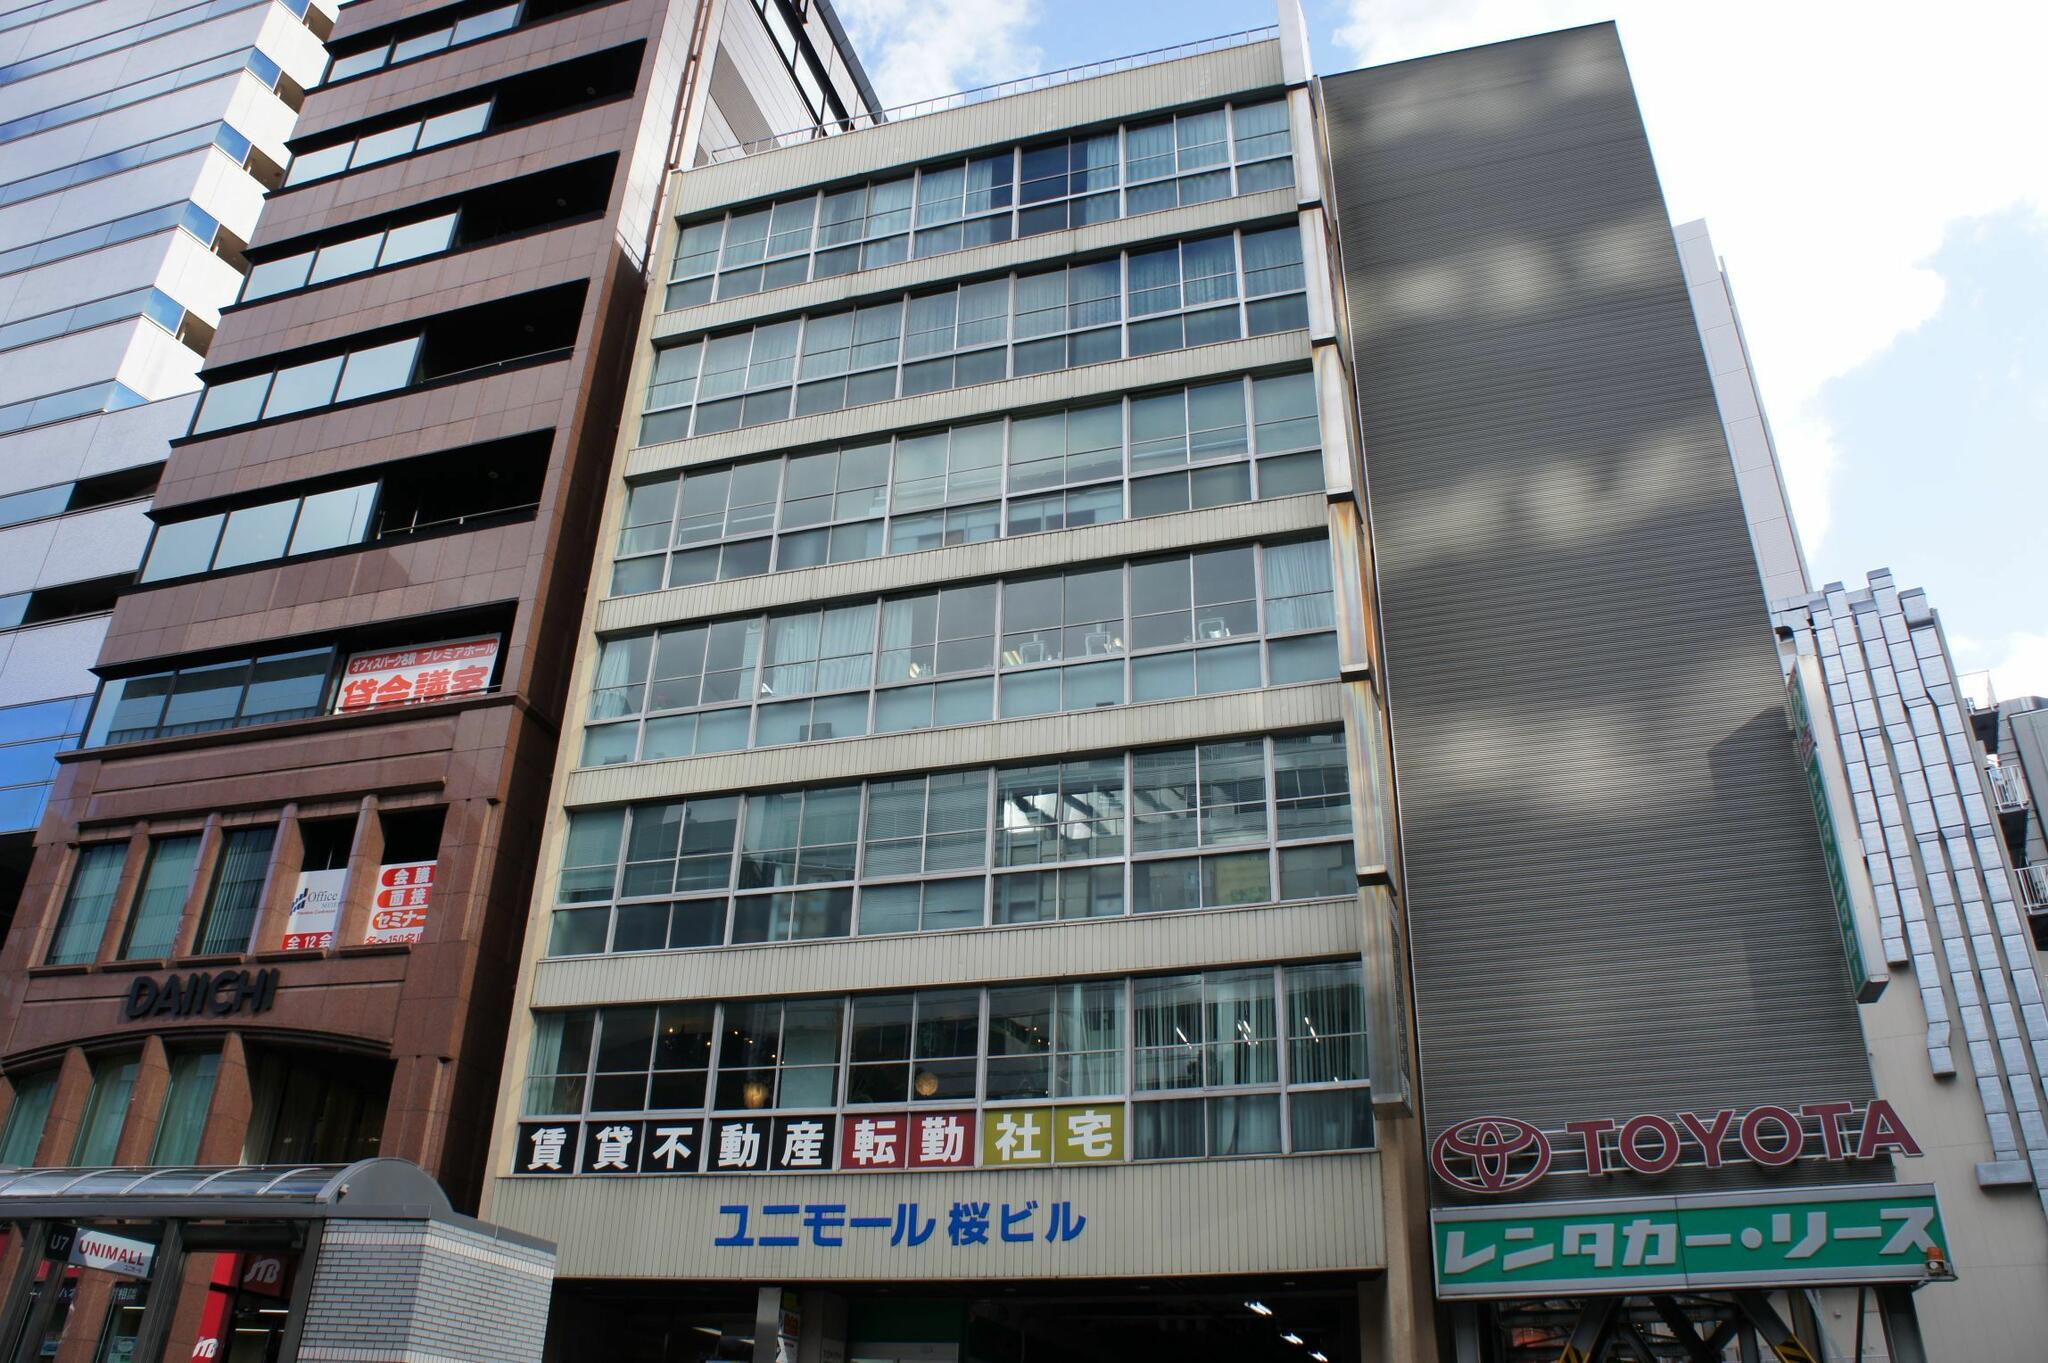 名古屋会議室 ユニモール桜名古屋駅前店の代表写真1